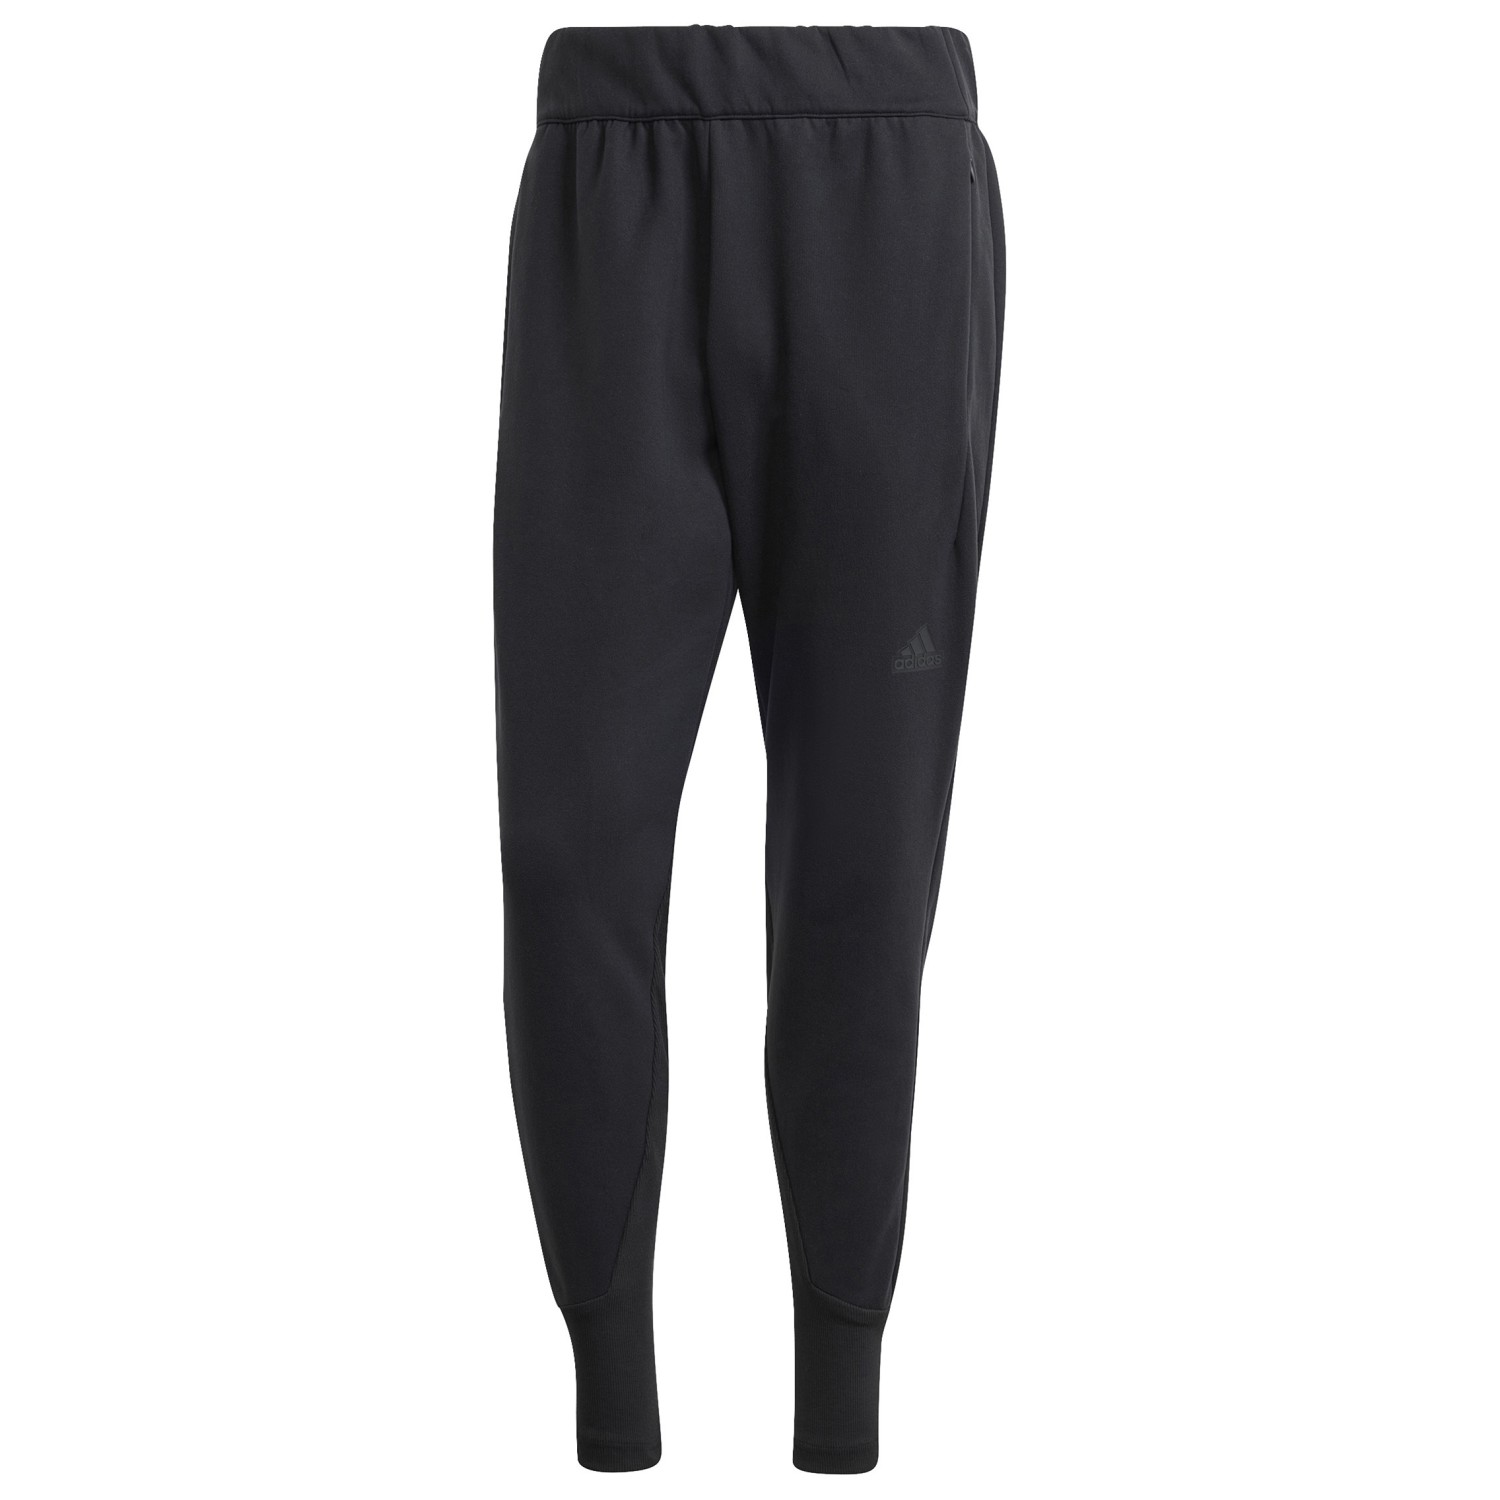 Тренировочные брюки Adidas M Z N E Winterized Pant, черный брюки муж h67150 adidas tennis pant black white размер m